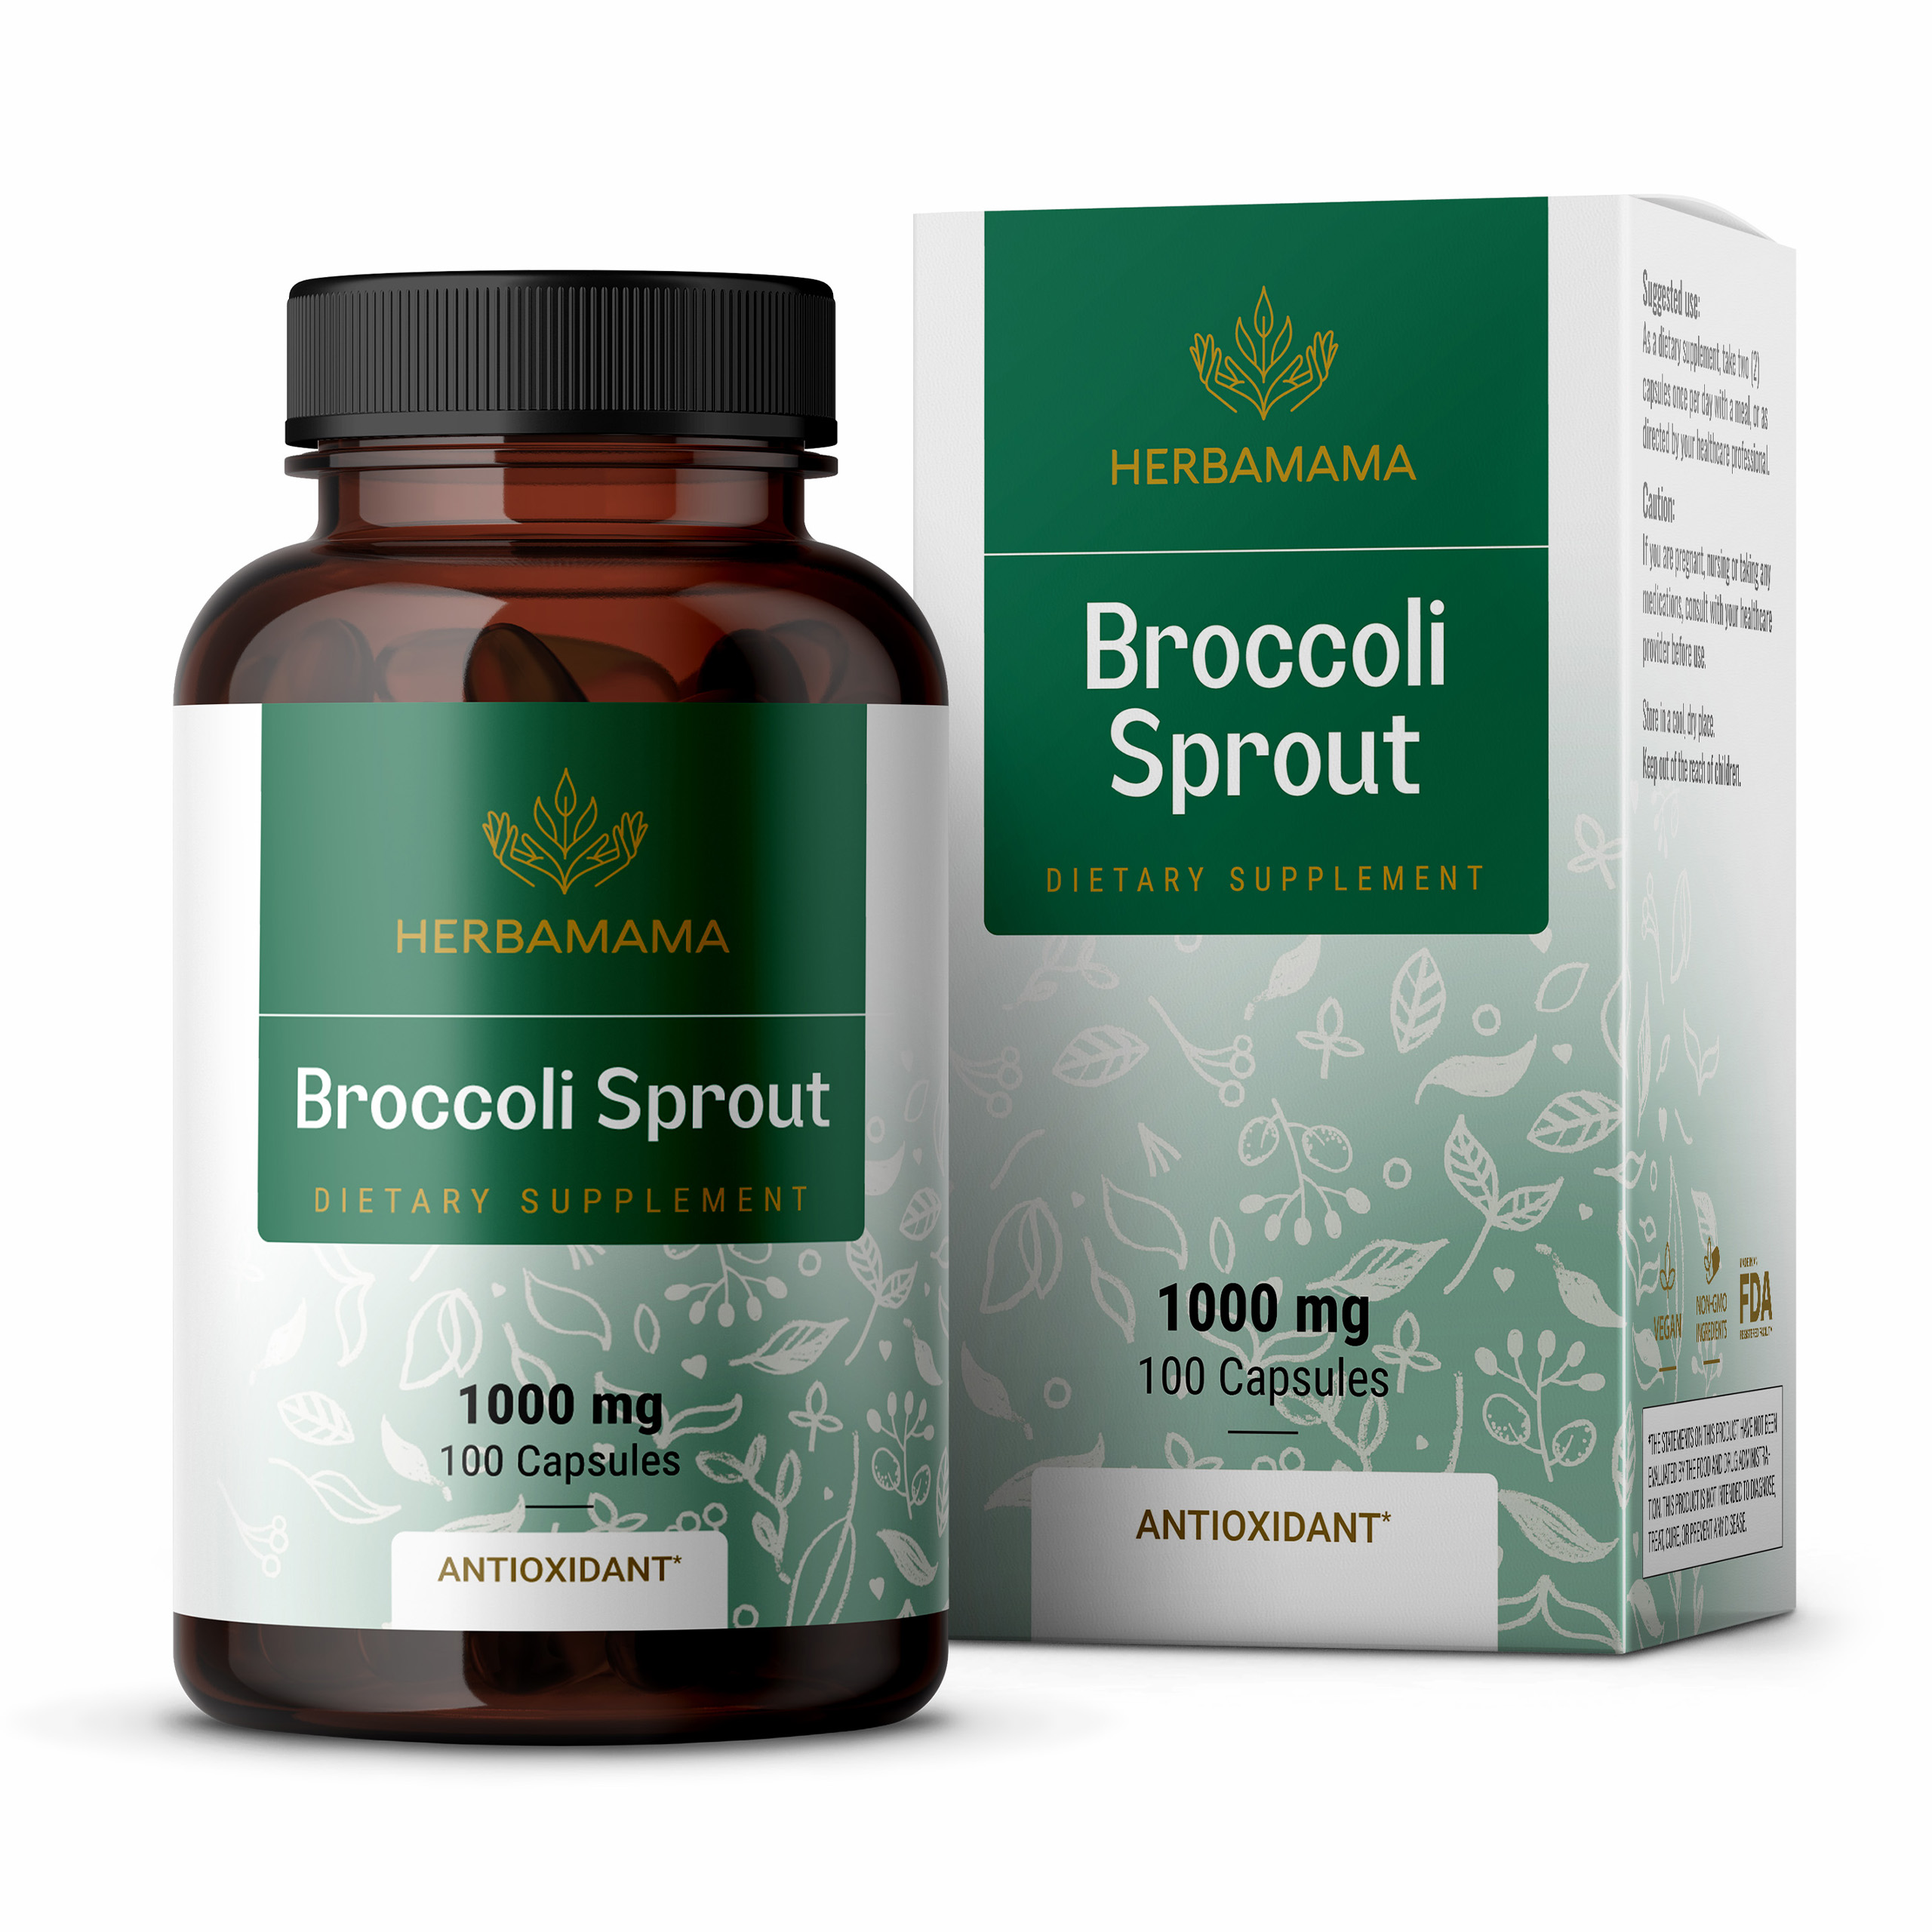 HERBAMAMA Broccoli Sprout Extract Capsules - Sulforaphane Supplement, 100 Veggie Caps - image 1 of 7